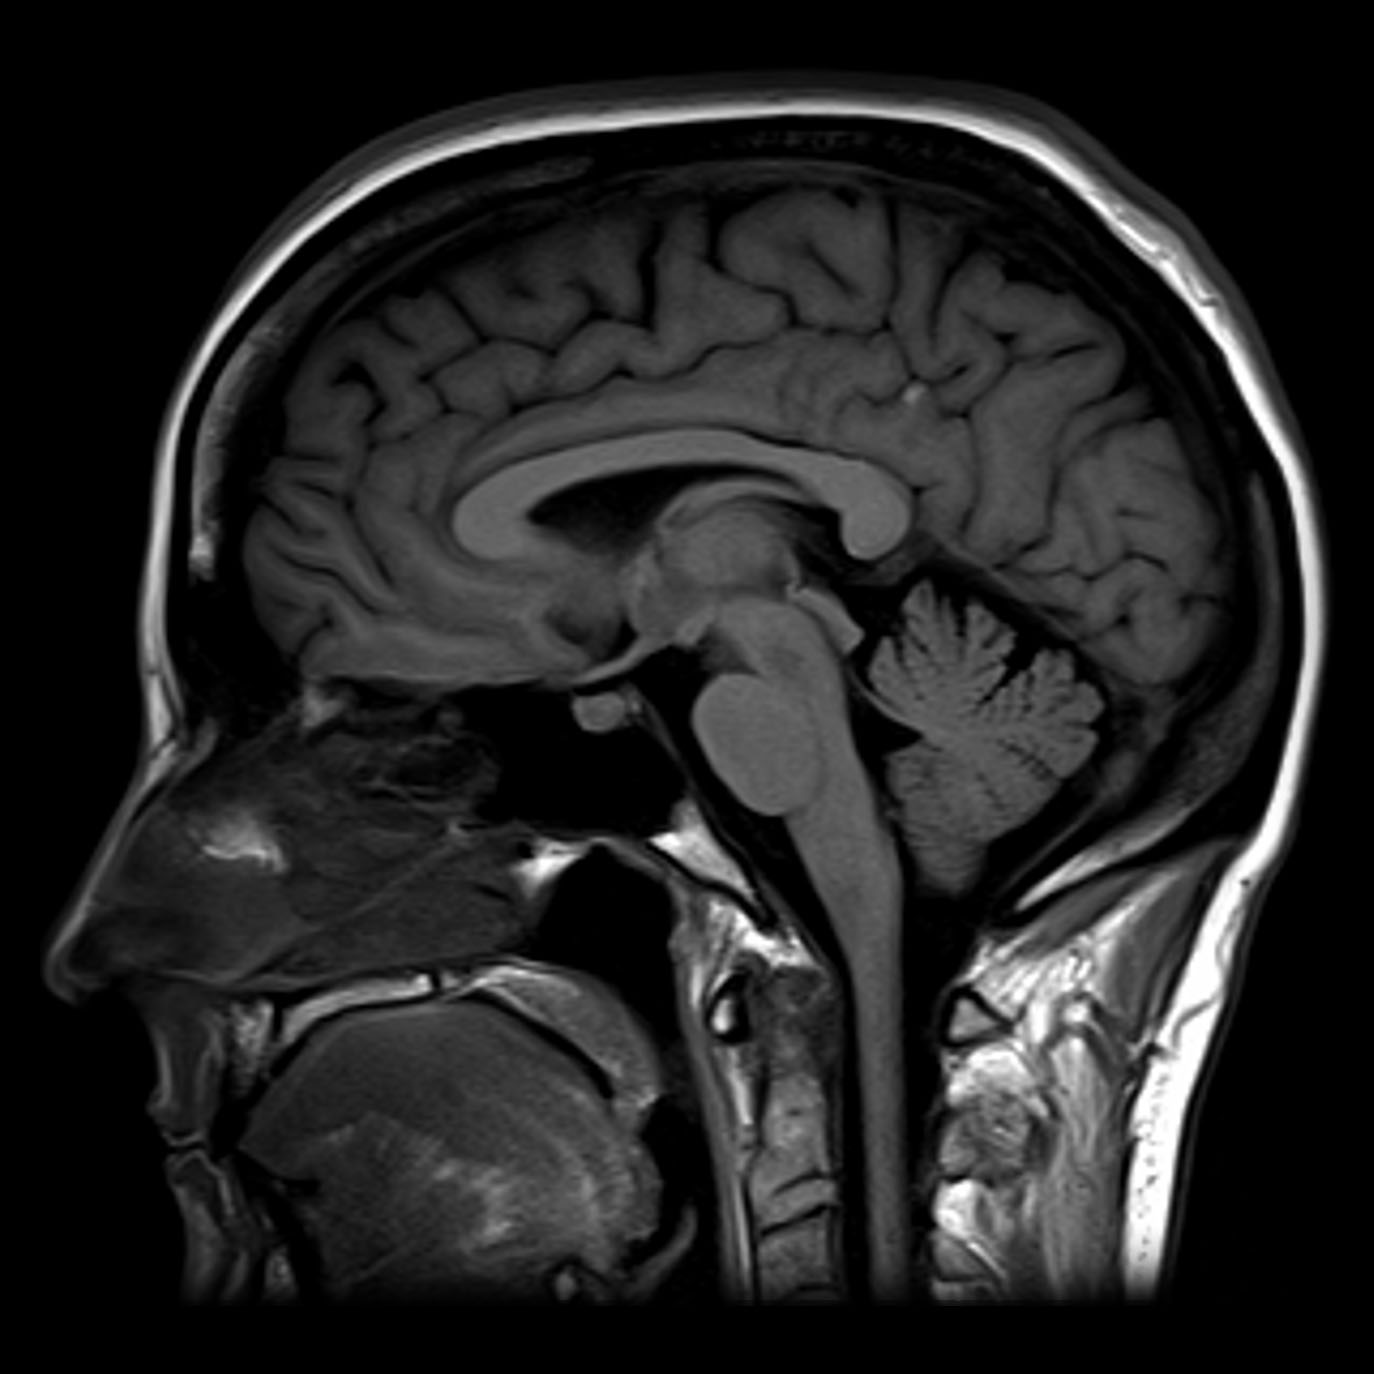 Normal MRI T1 sagittal section through the brain. Case courtesy of Assoc Prof Frank Gaillard.